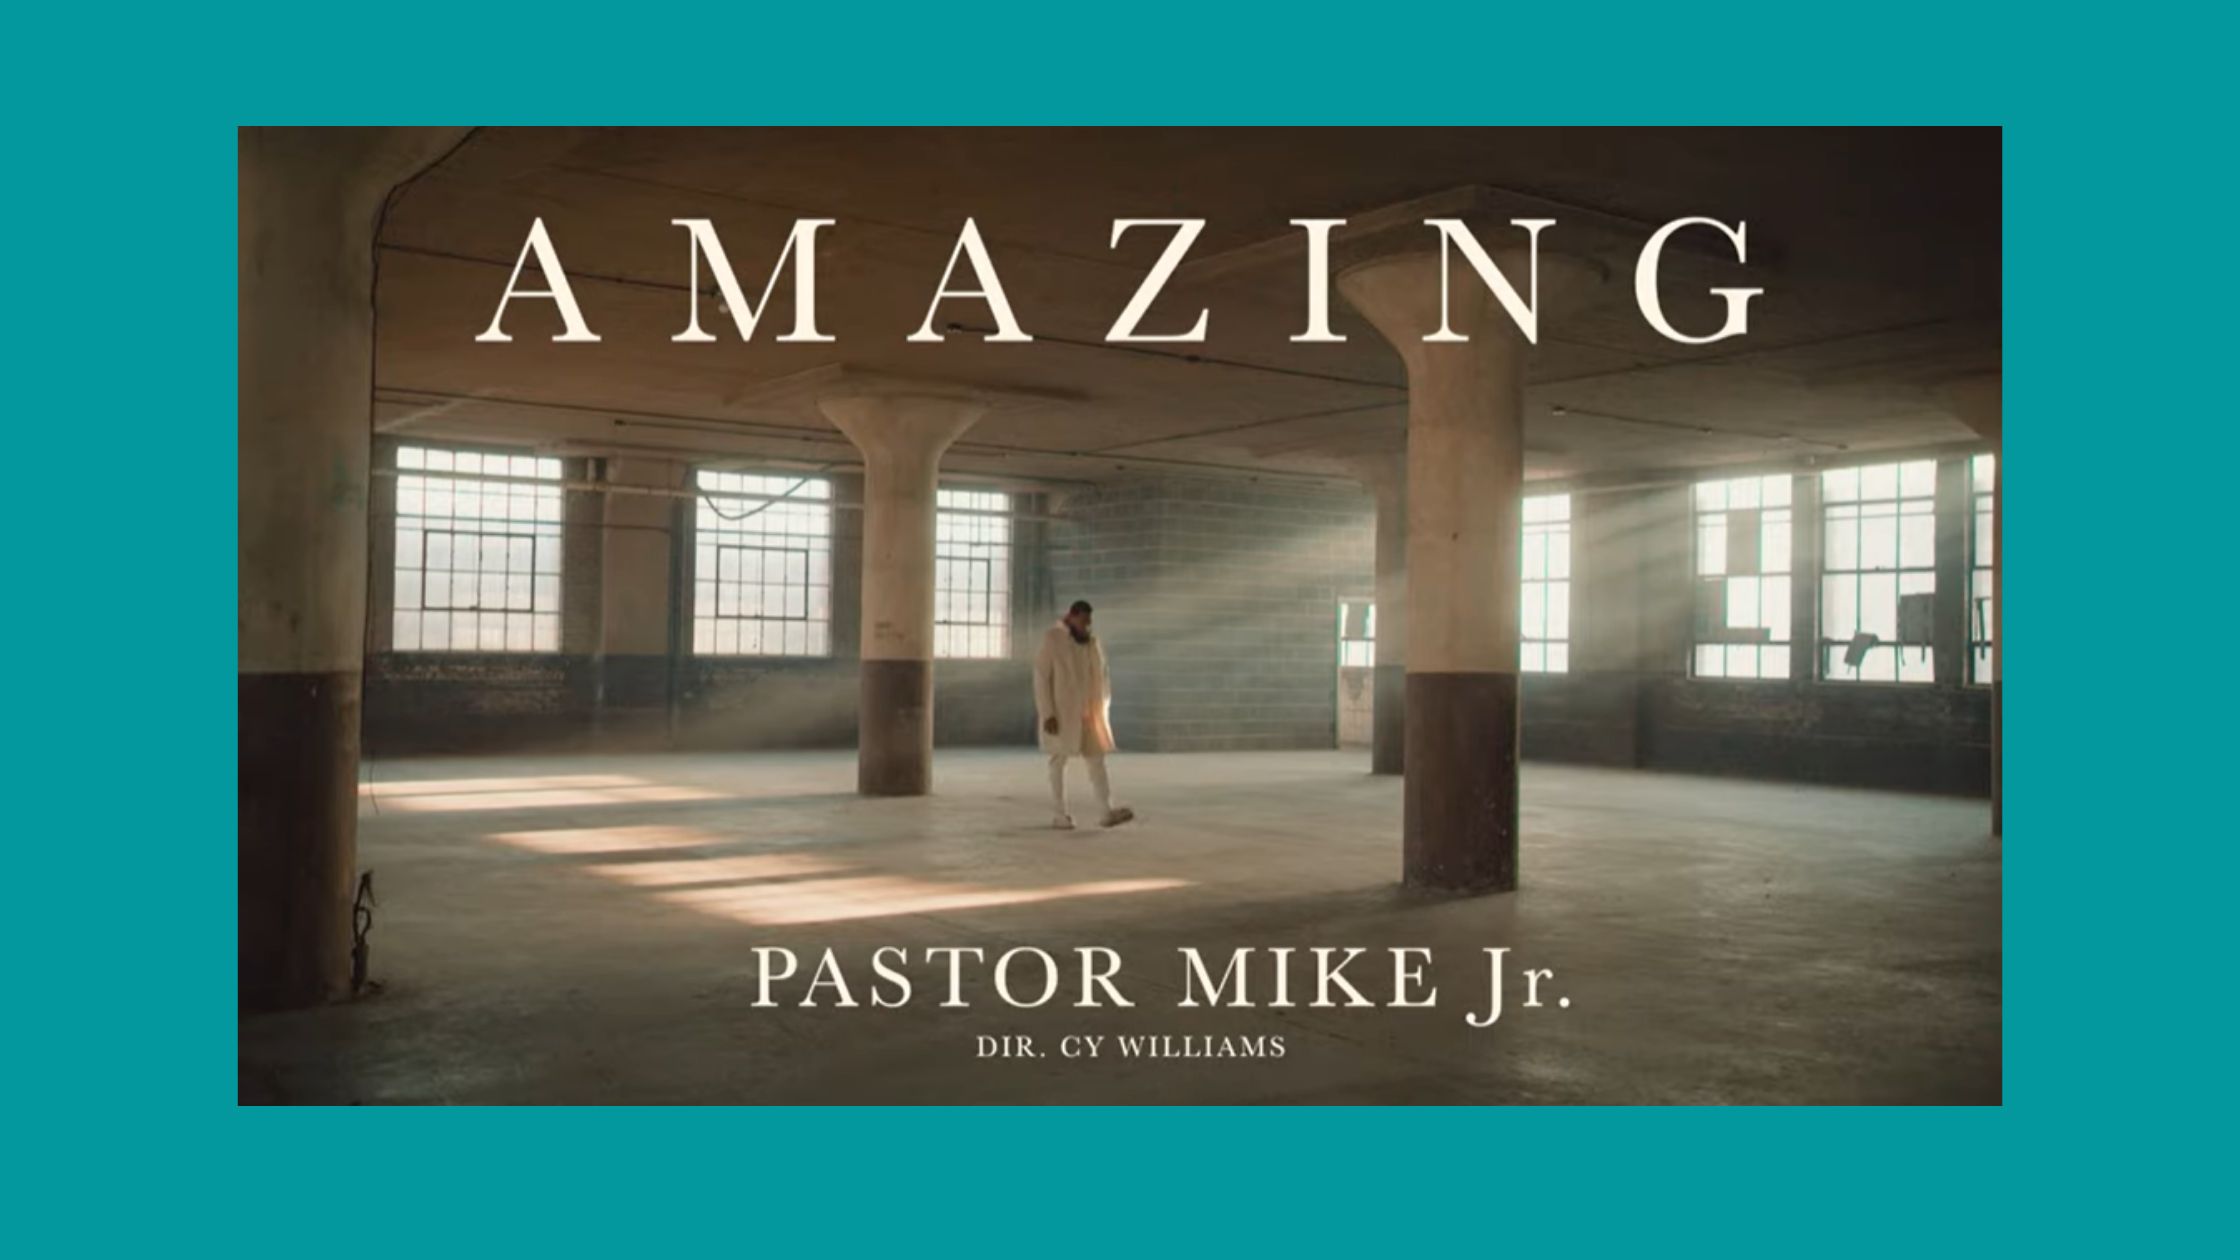 pastor mike jr - amazing video